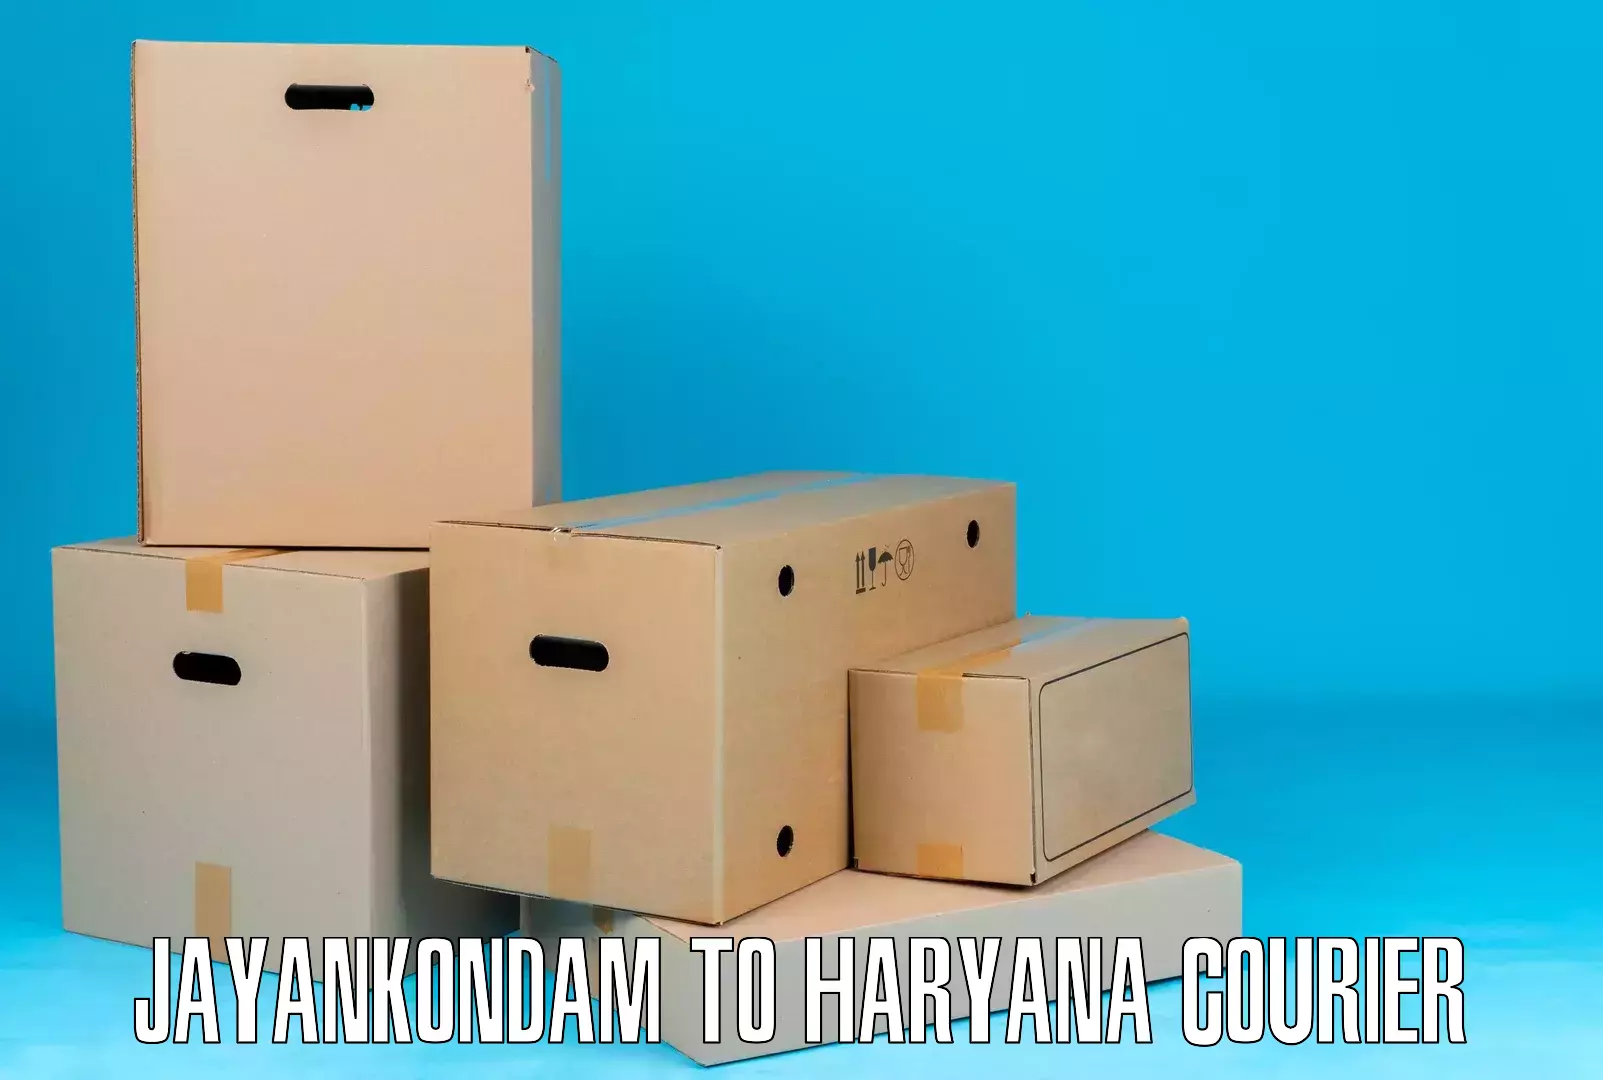 International courier networks Jayankondam to Haryana